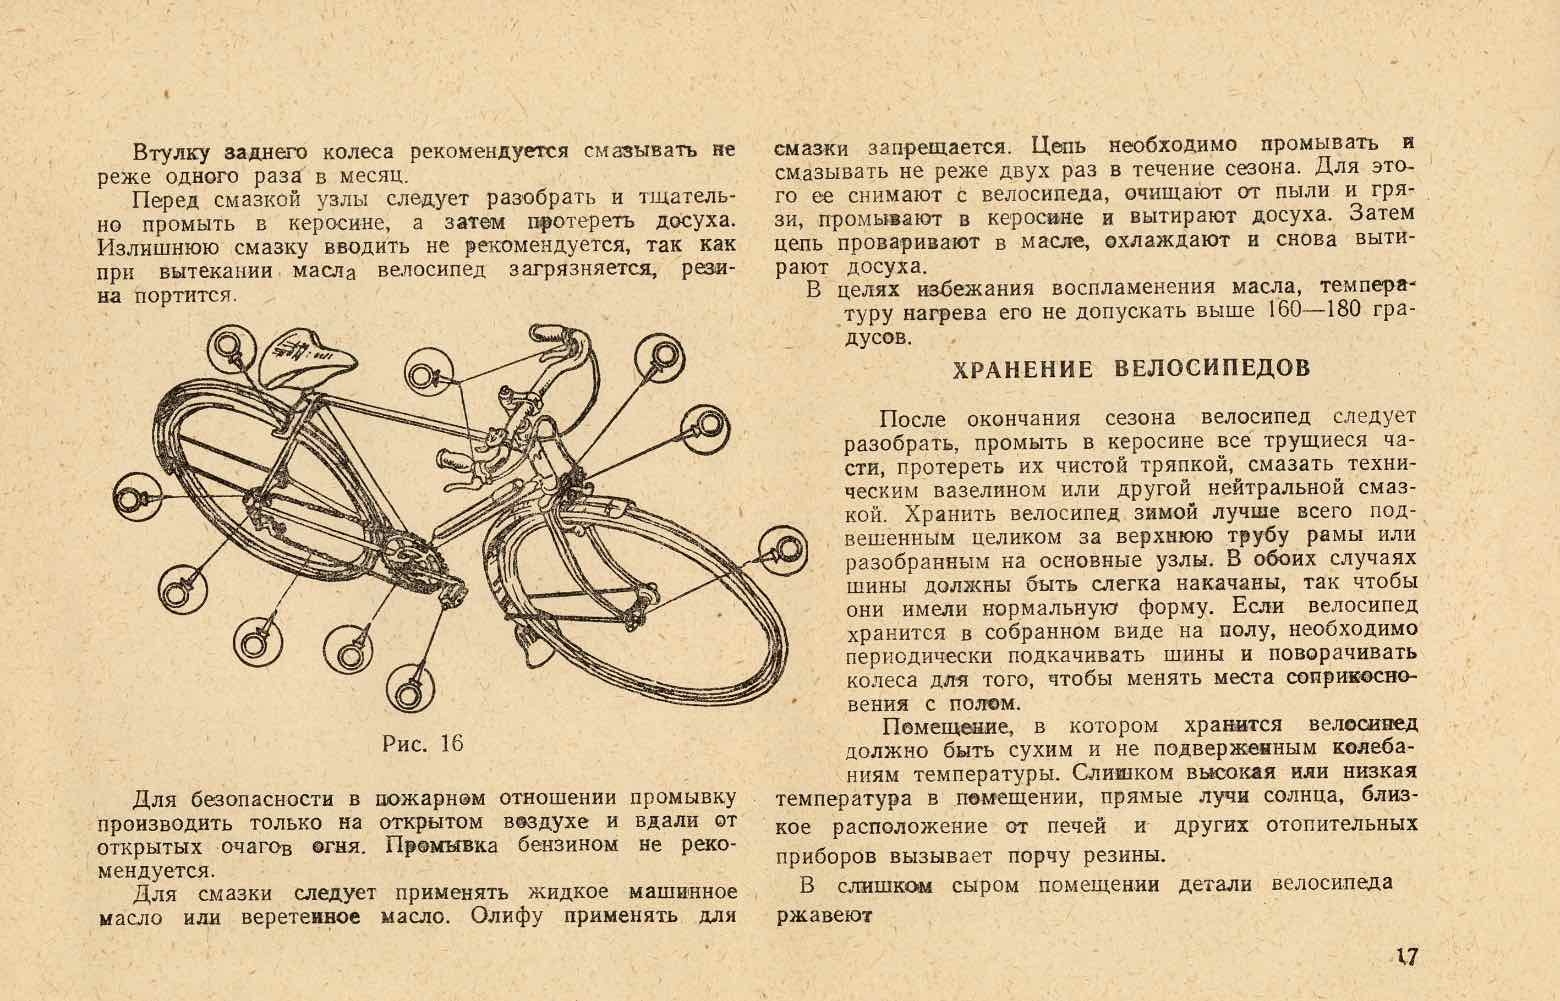 Kharkov - instructions for B130K & B134 - page 17 main image